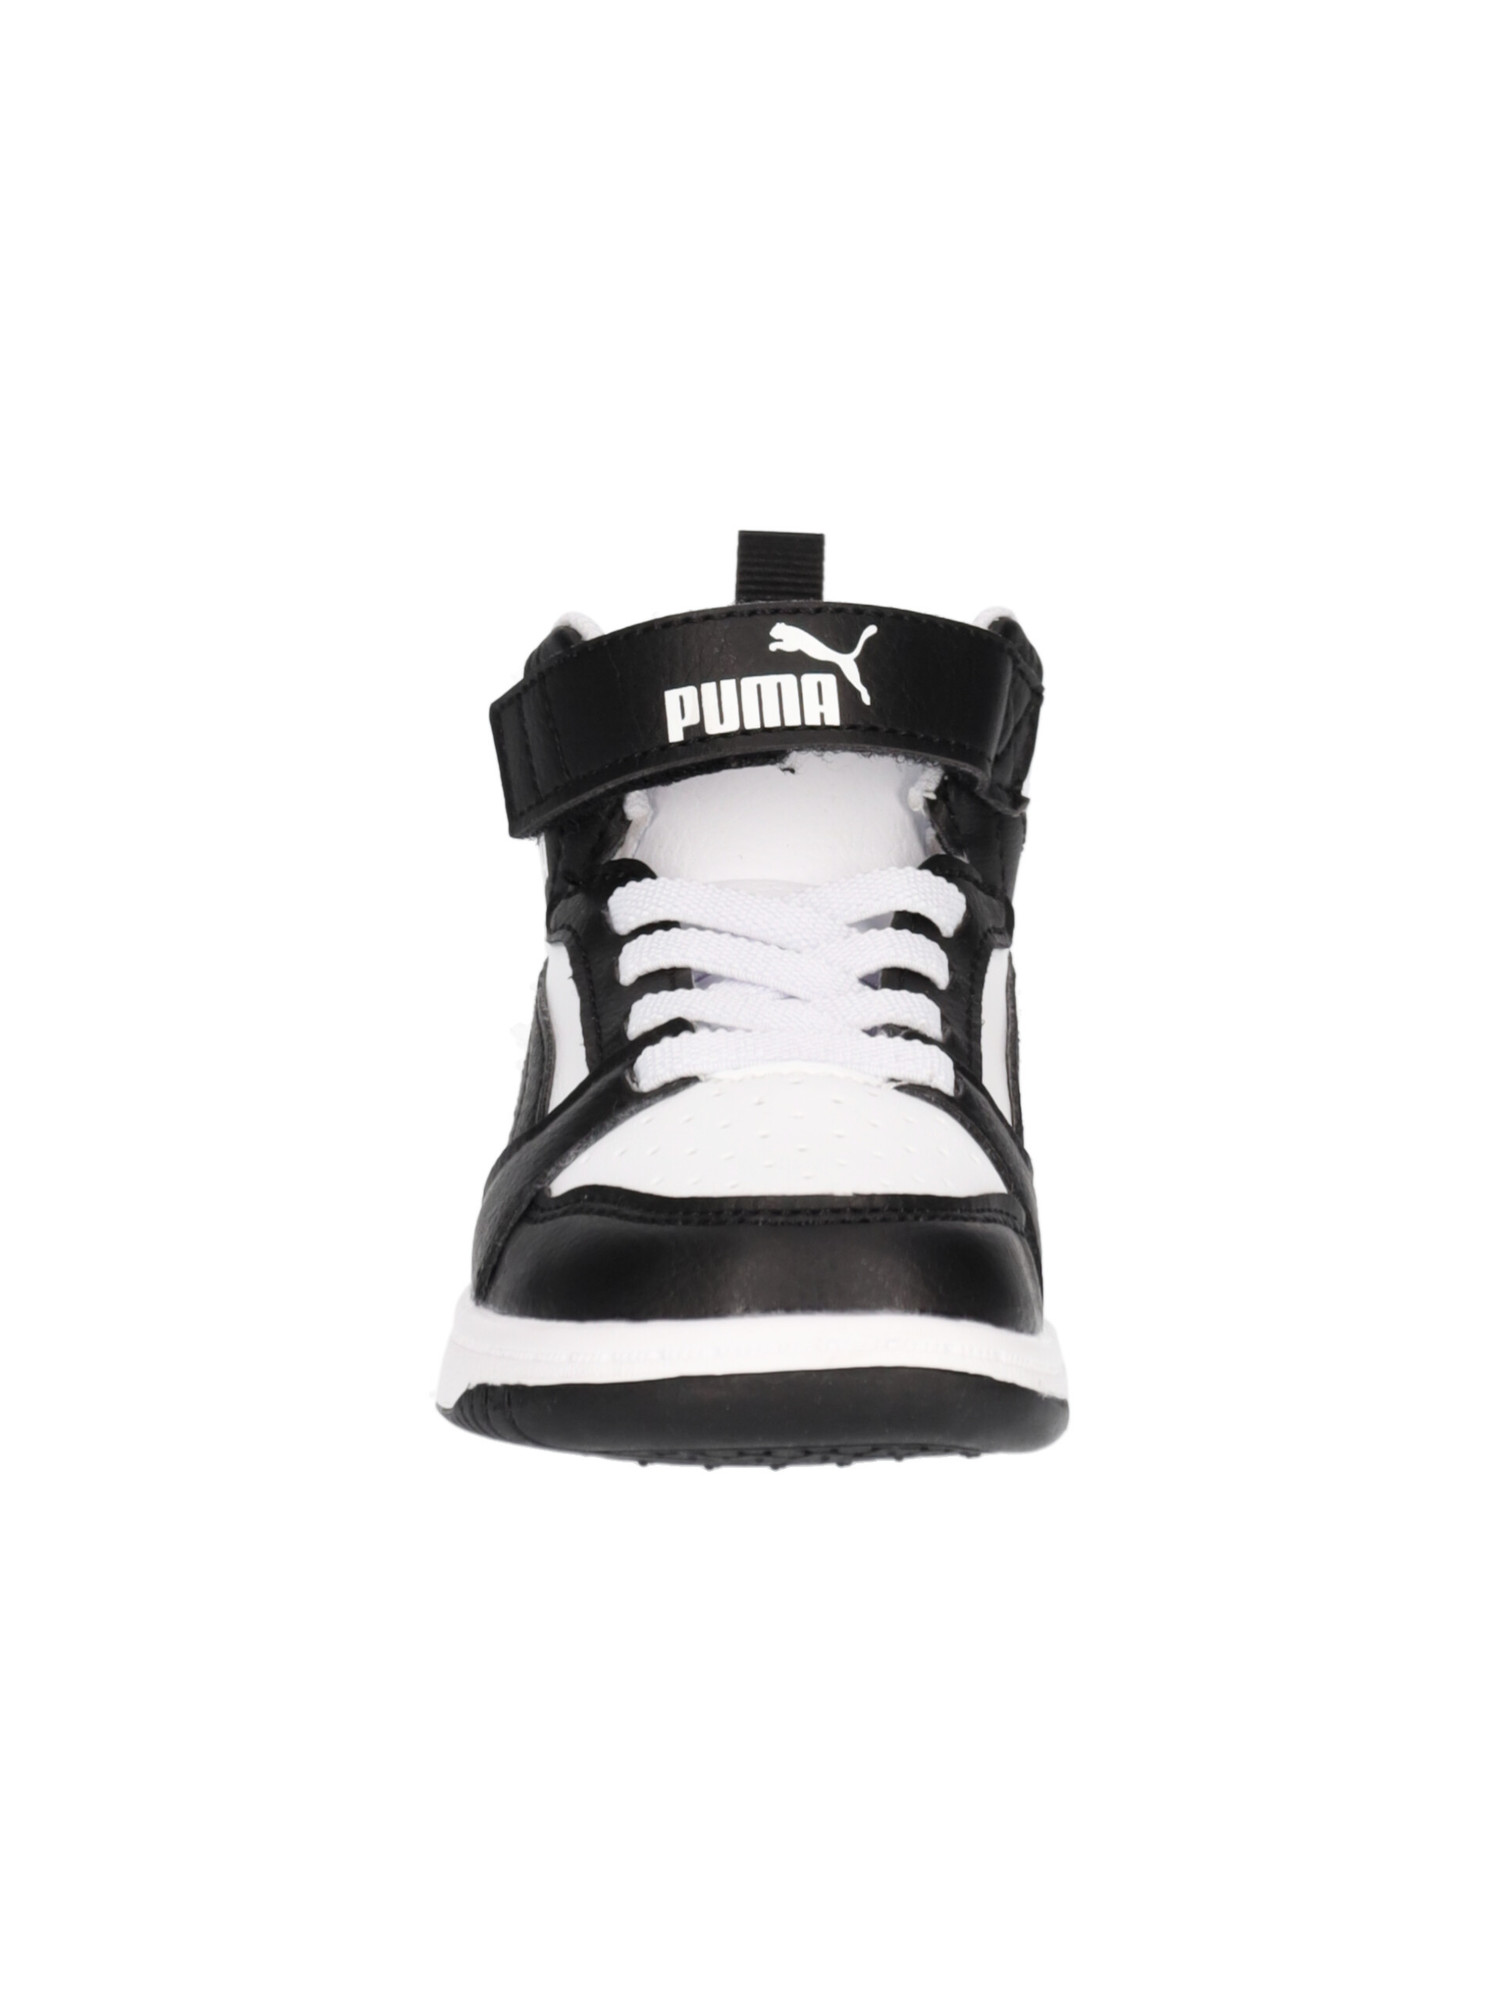 sneaker-puma-rebound-primi-passi-bambino-nera-18c3ec